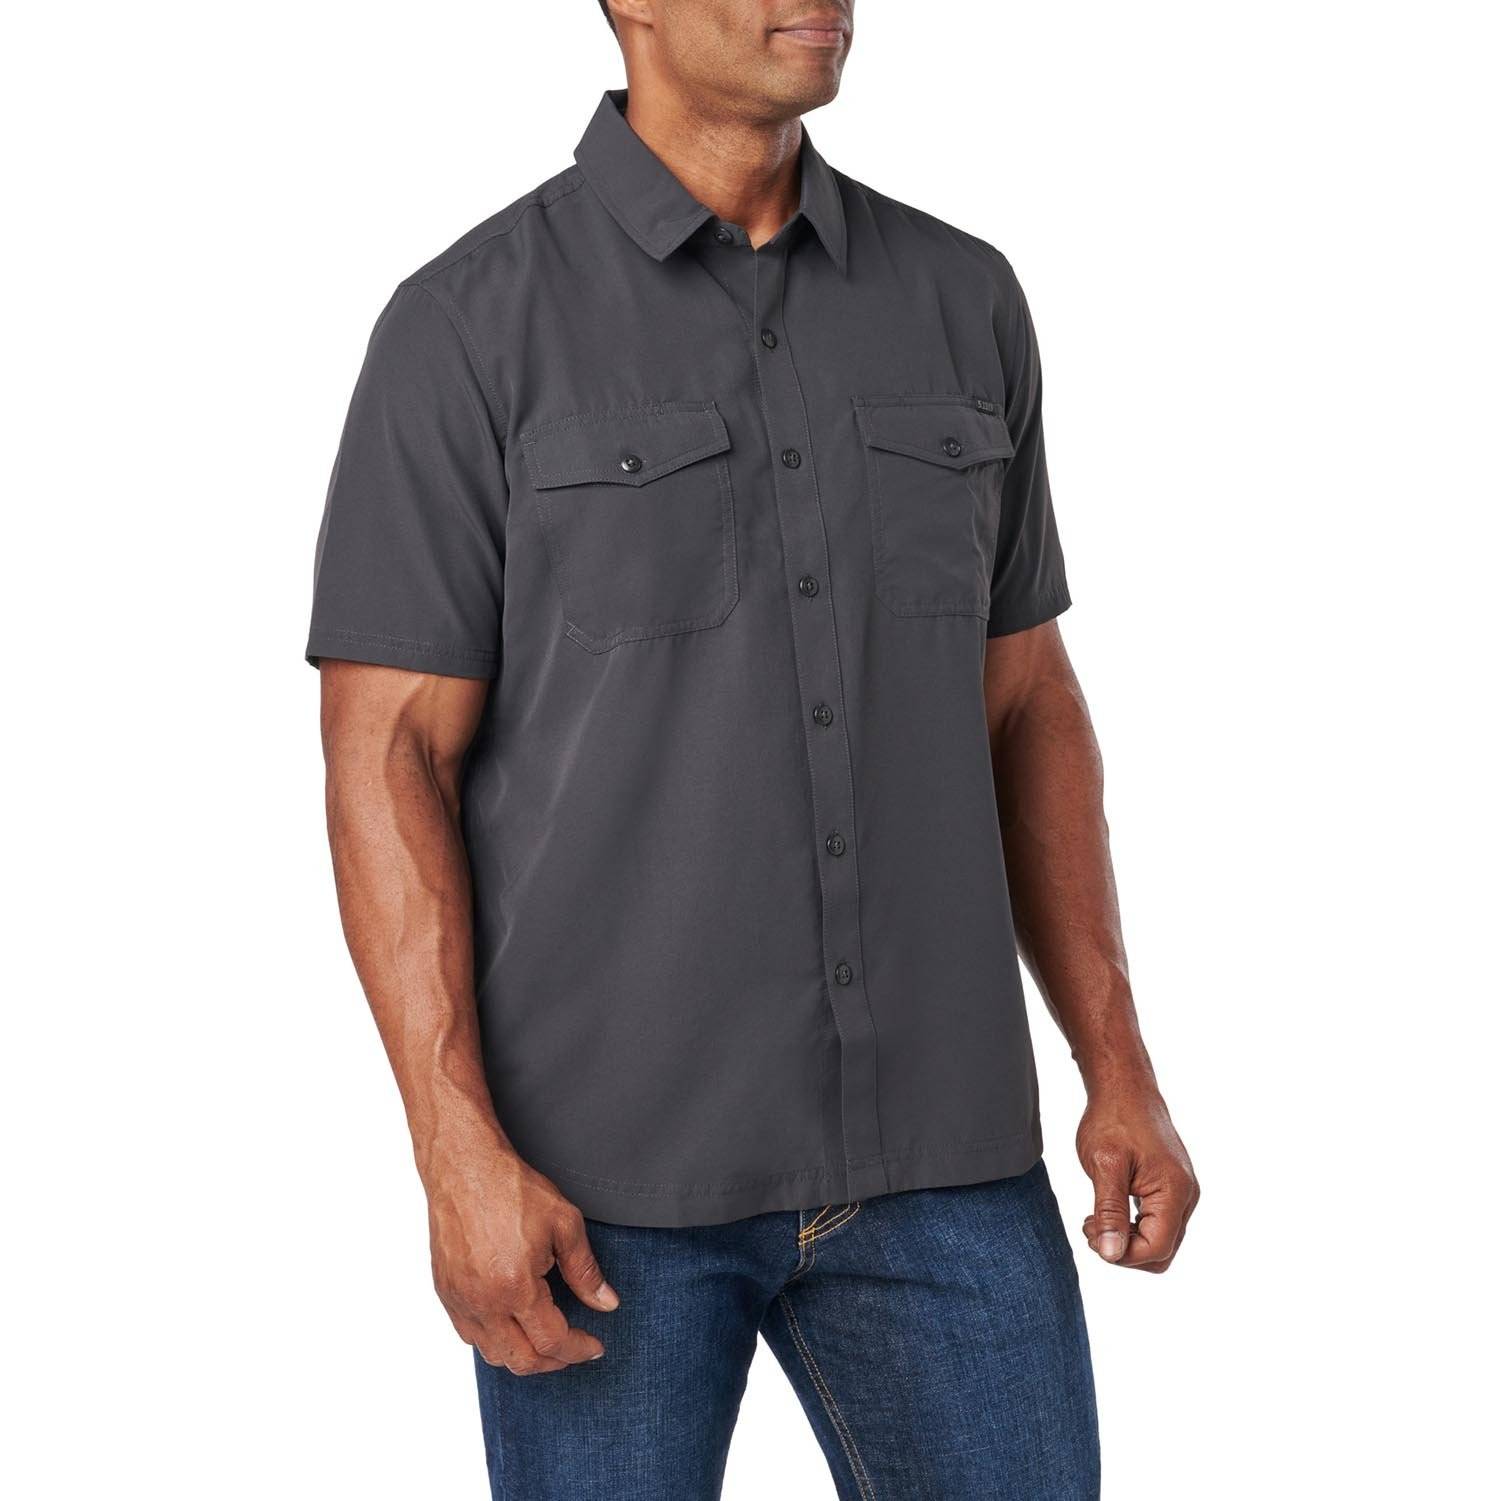 5.11 Tactical Marksman Short Sleeve Shirt | Galls